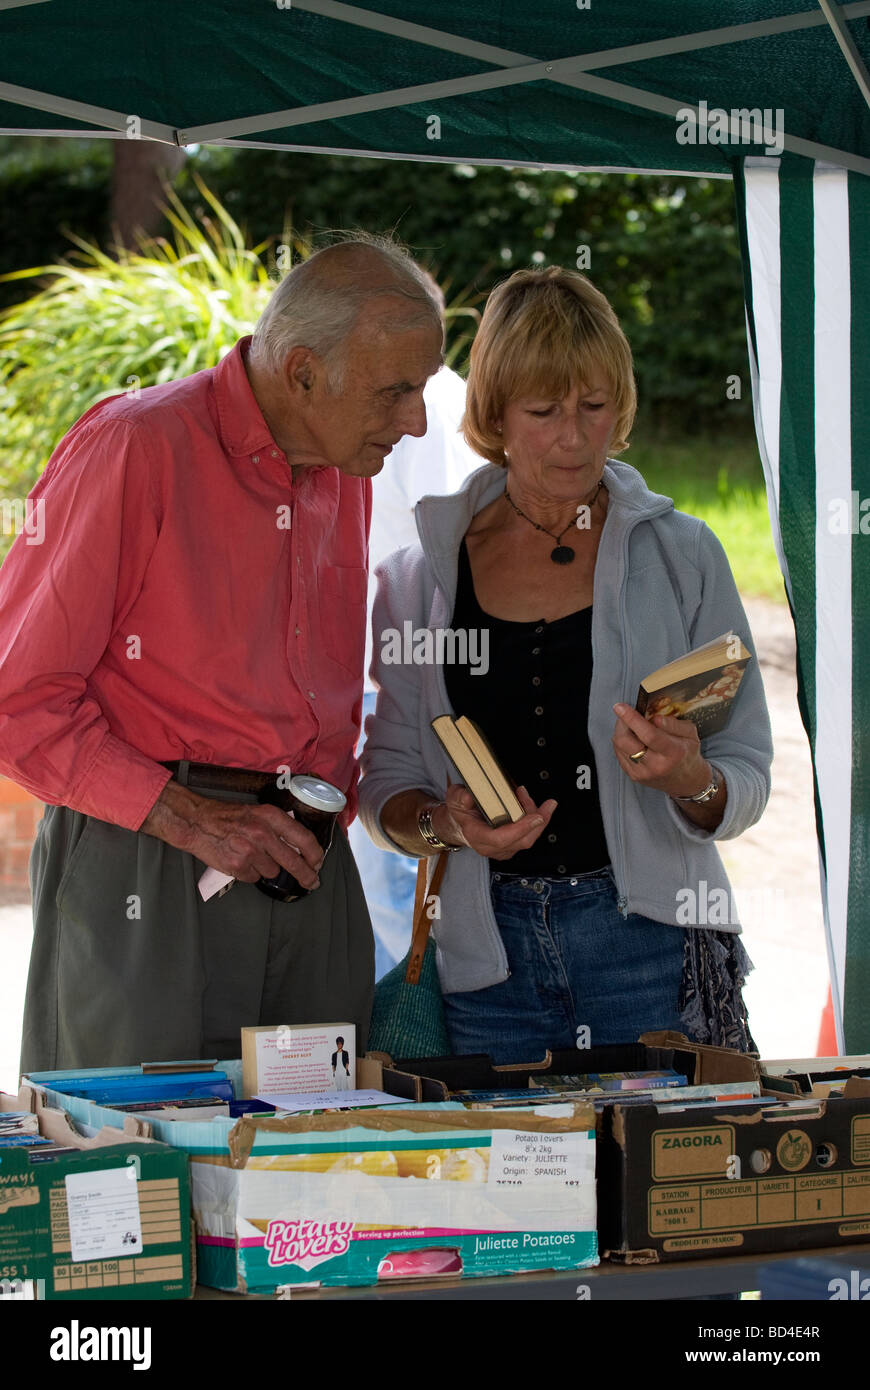 Los visitantes libro examina en calada Oakhanger Village exhiben, Hampshire, Reino Unido. Foto de stock